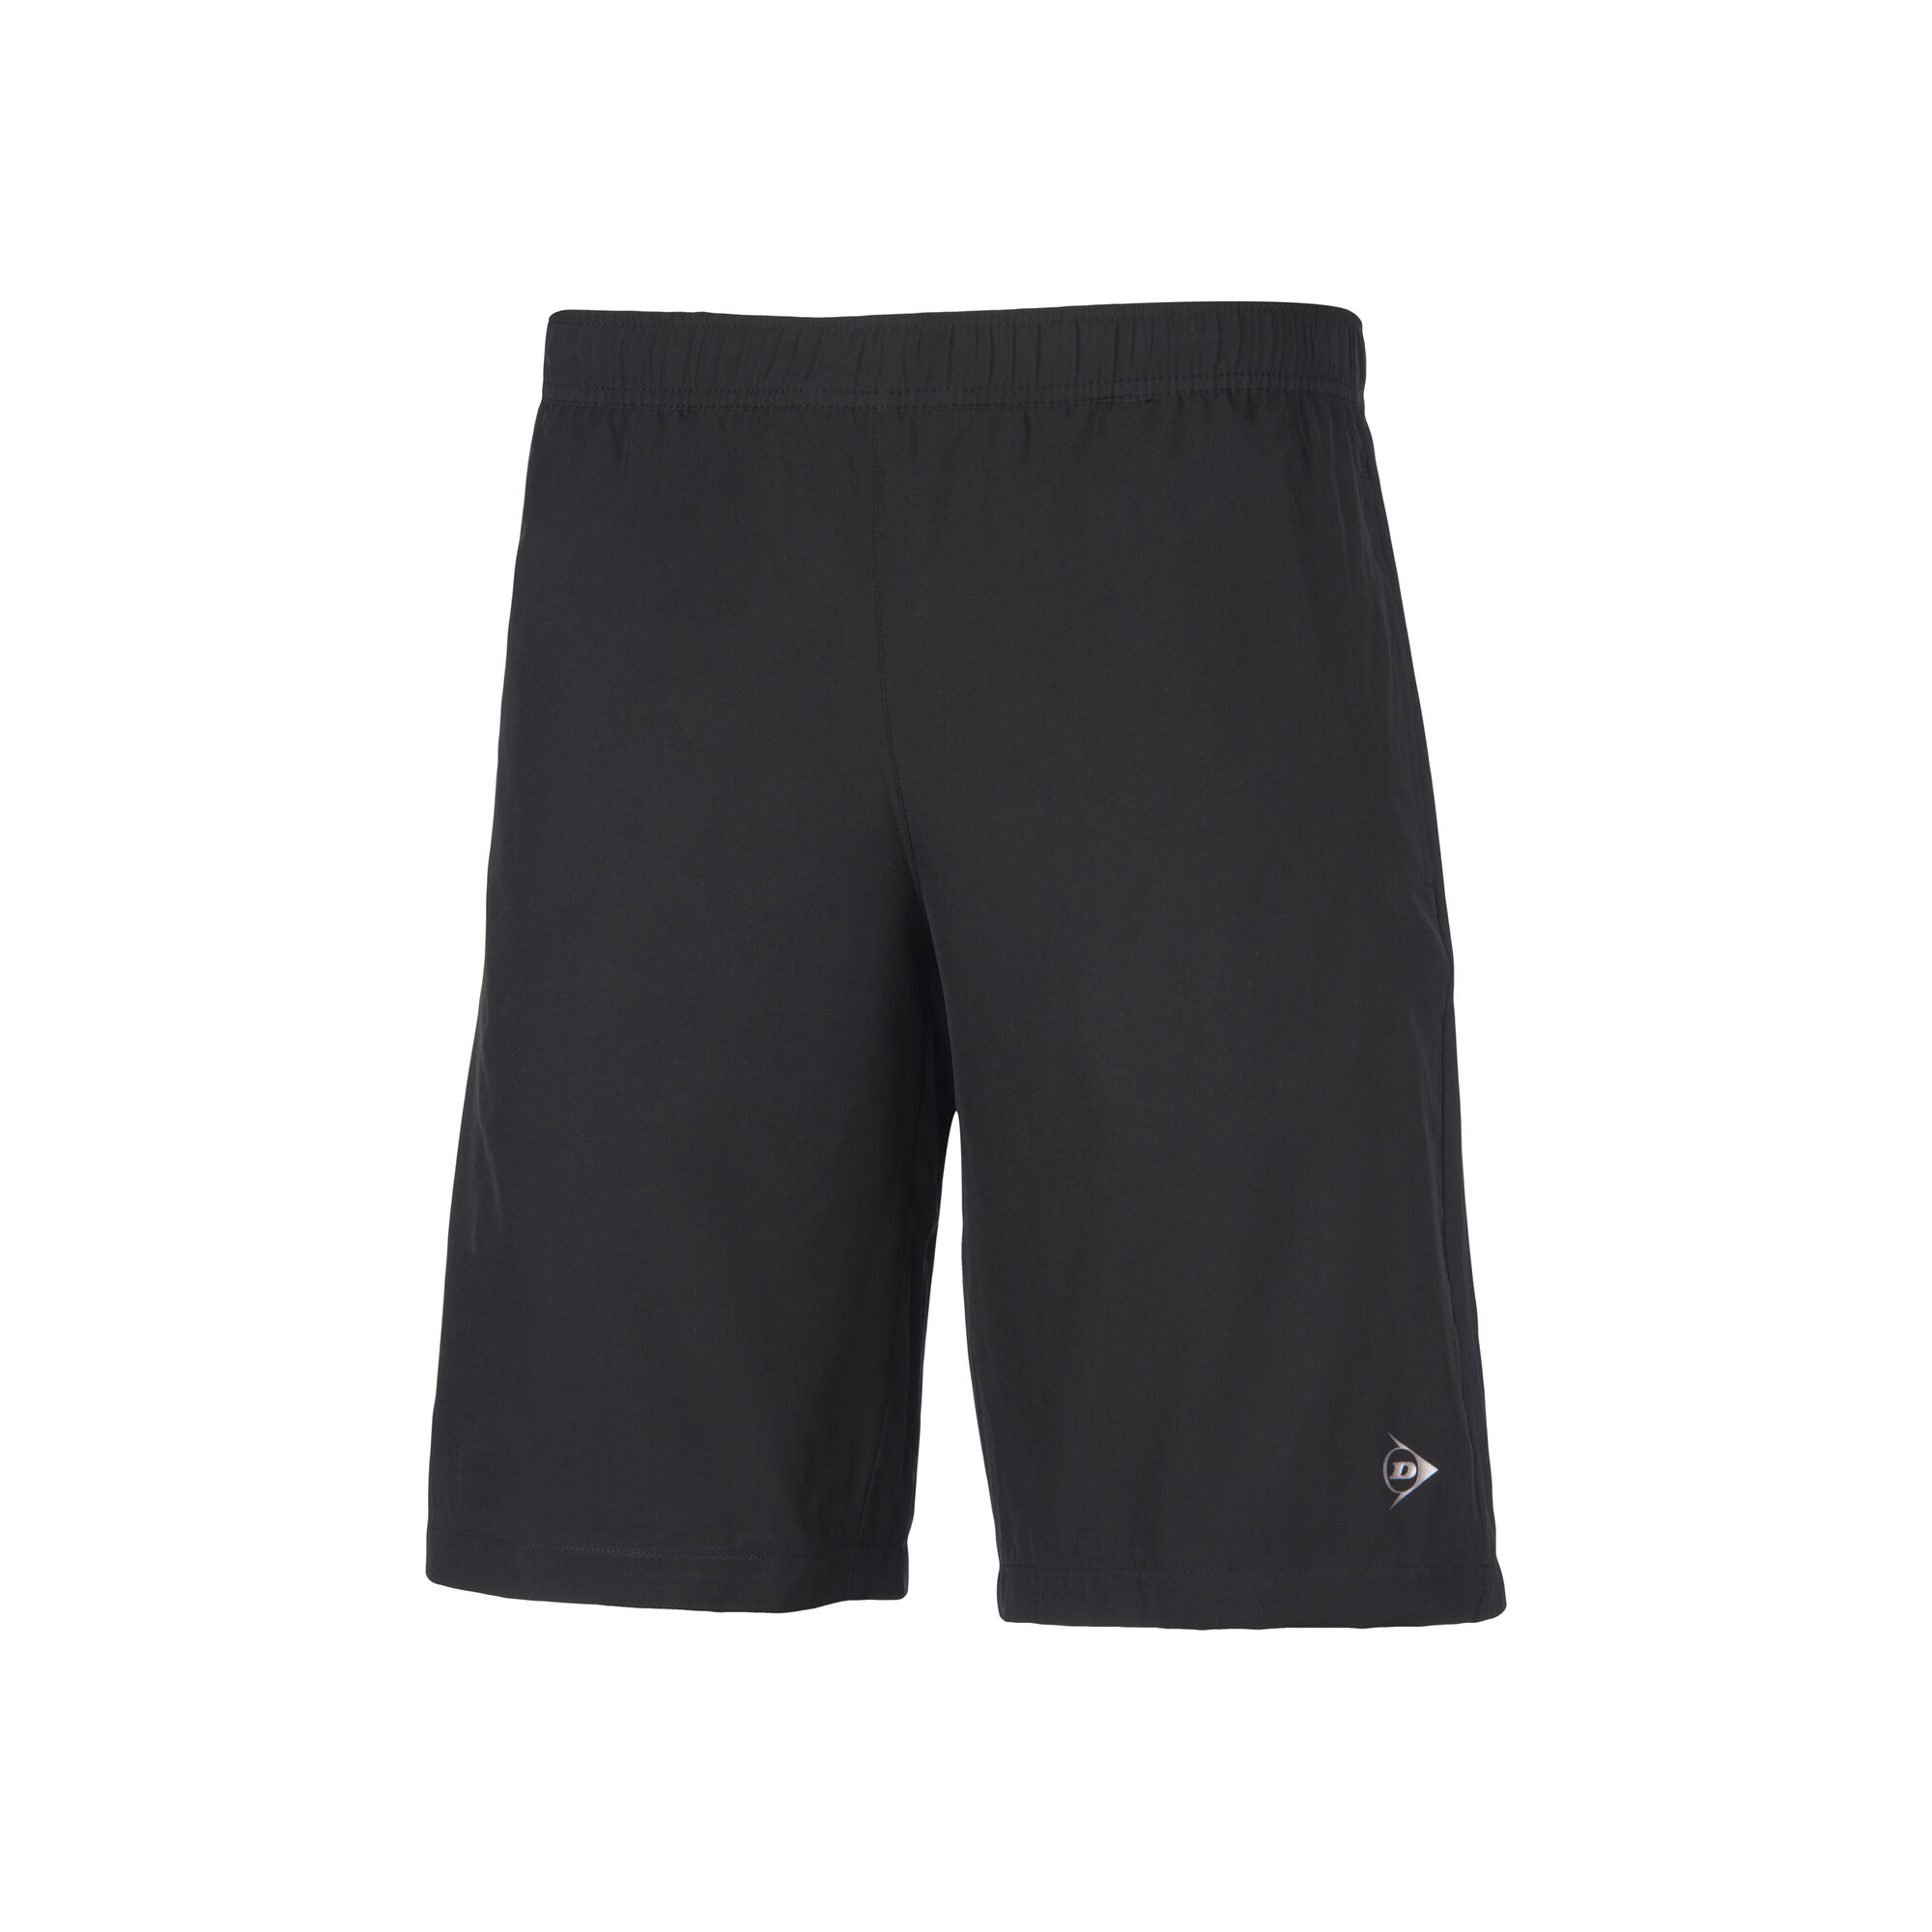 Buy Dunlop Woven Shorts Men Black, White online